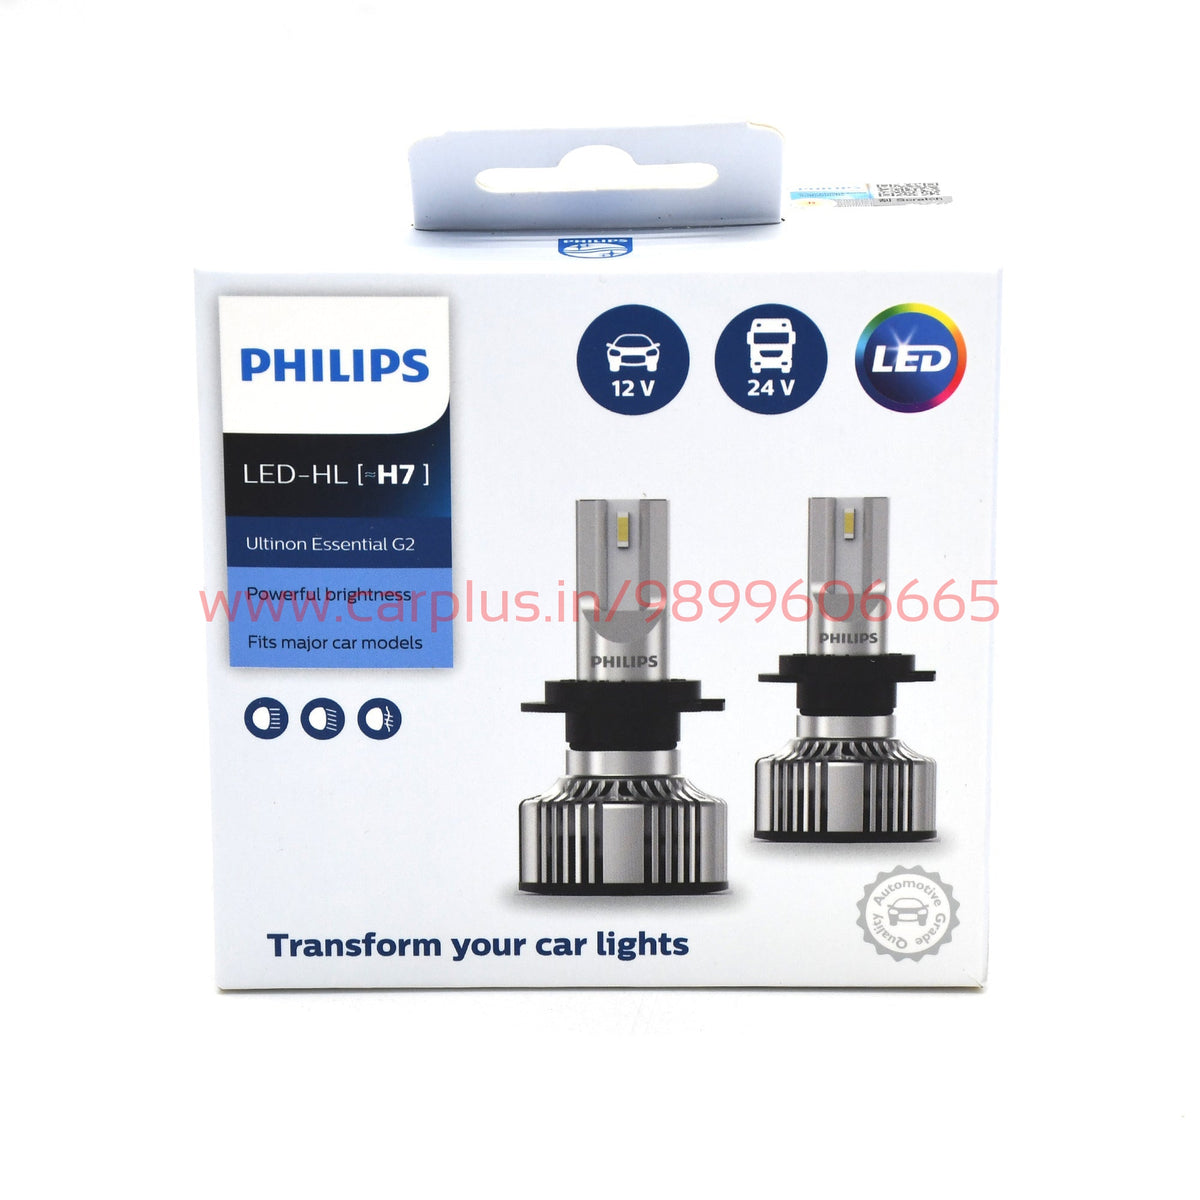 PHILIPS Ultinon Essential G2 LED Car Headlight Bulb